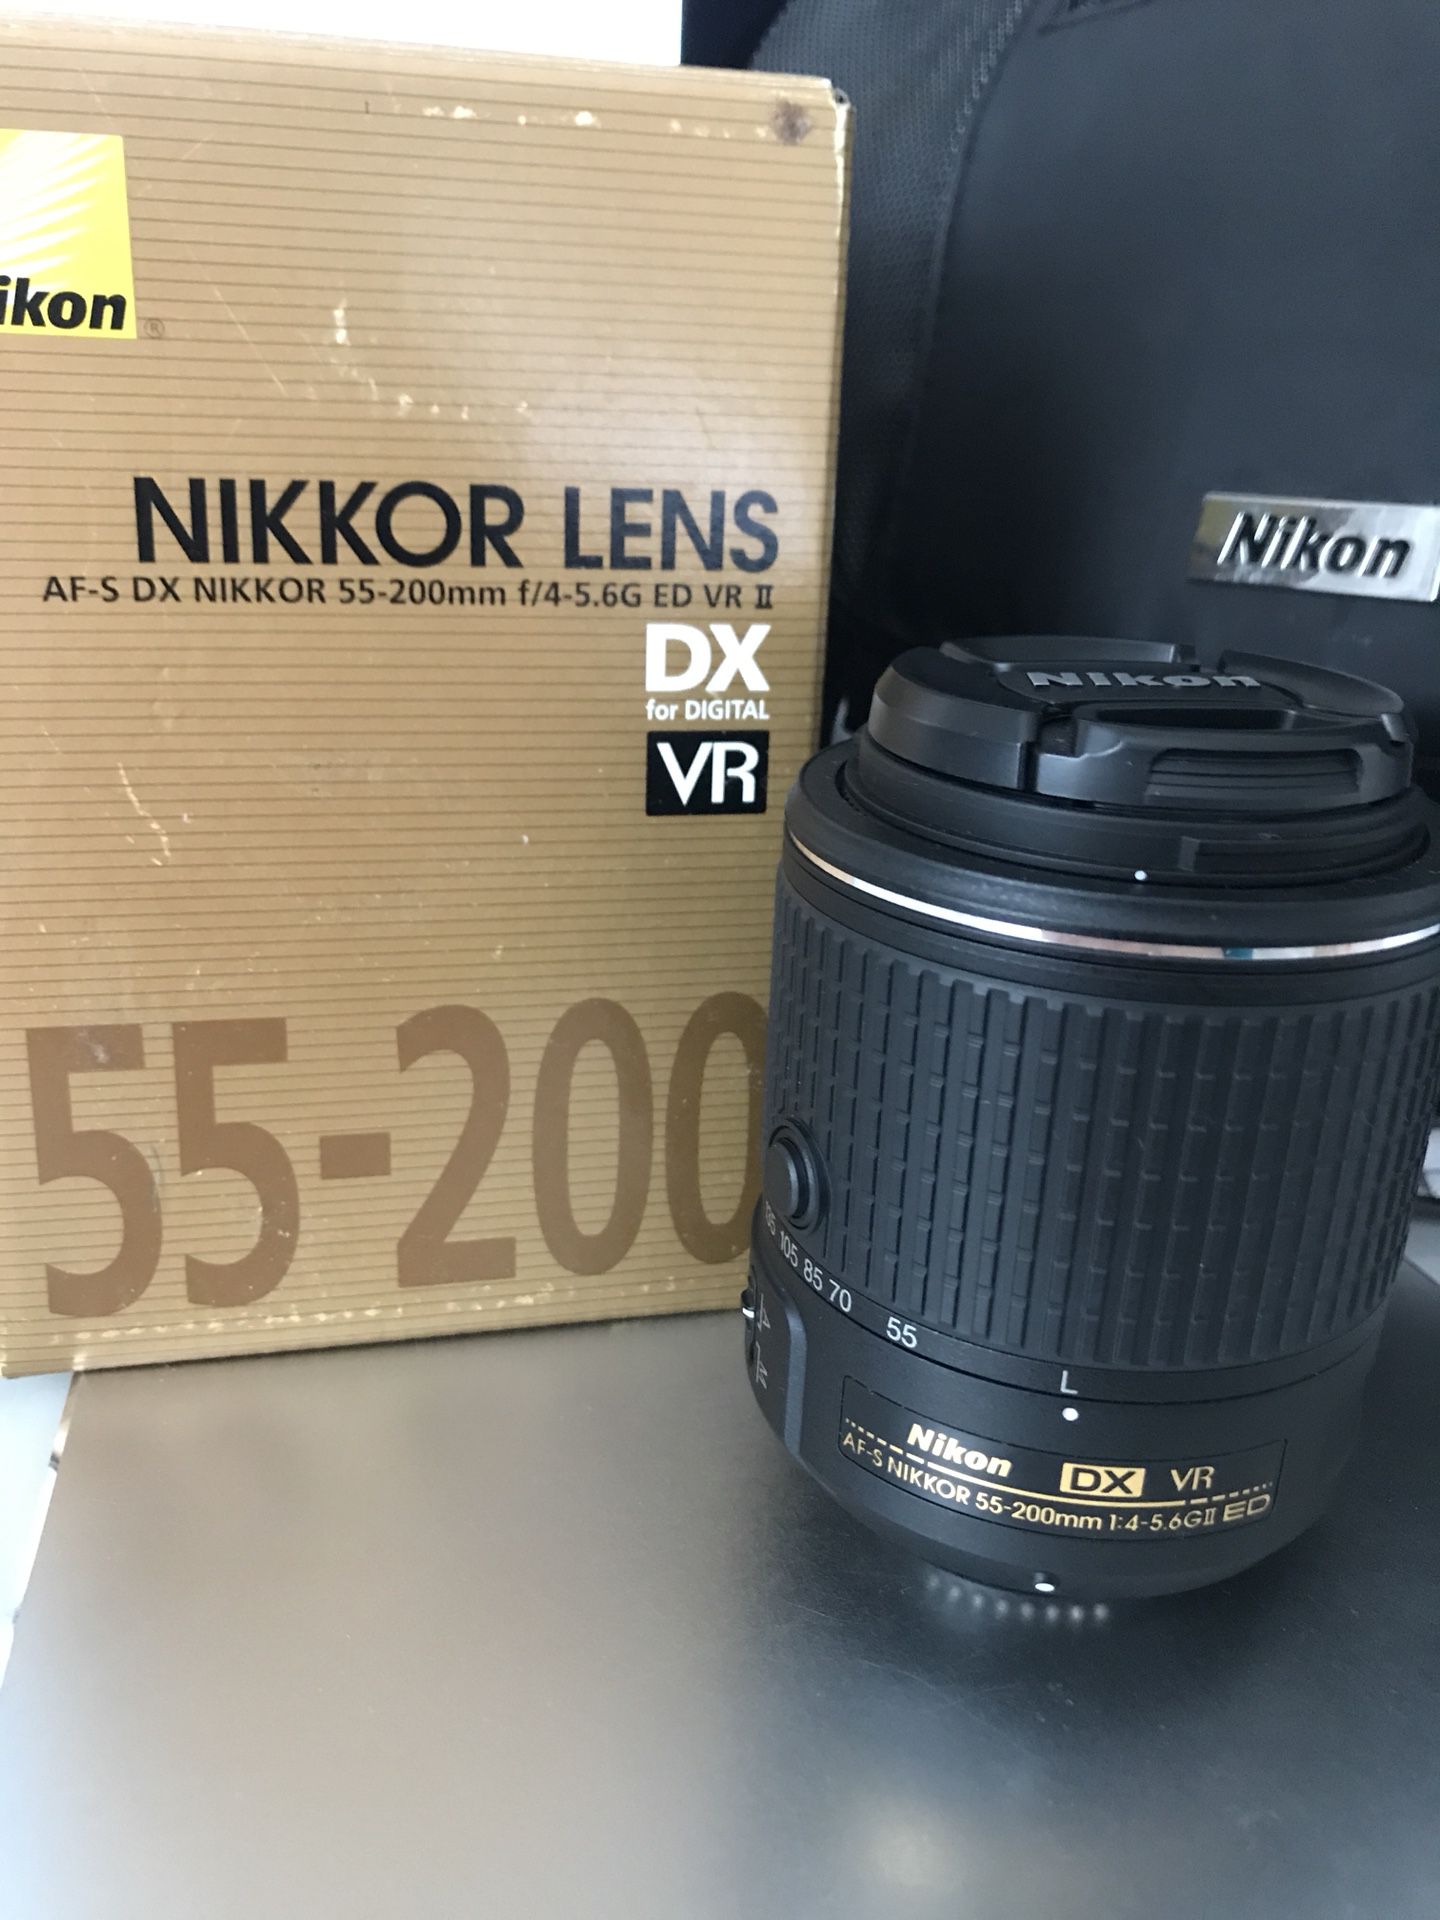 Nikon lens 55-200mm